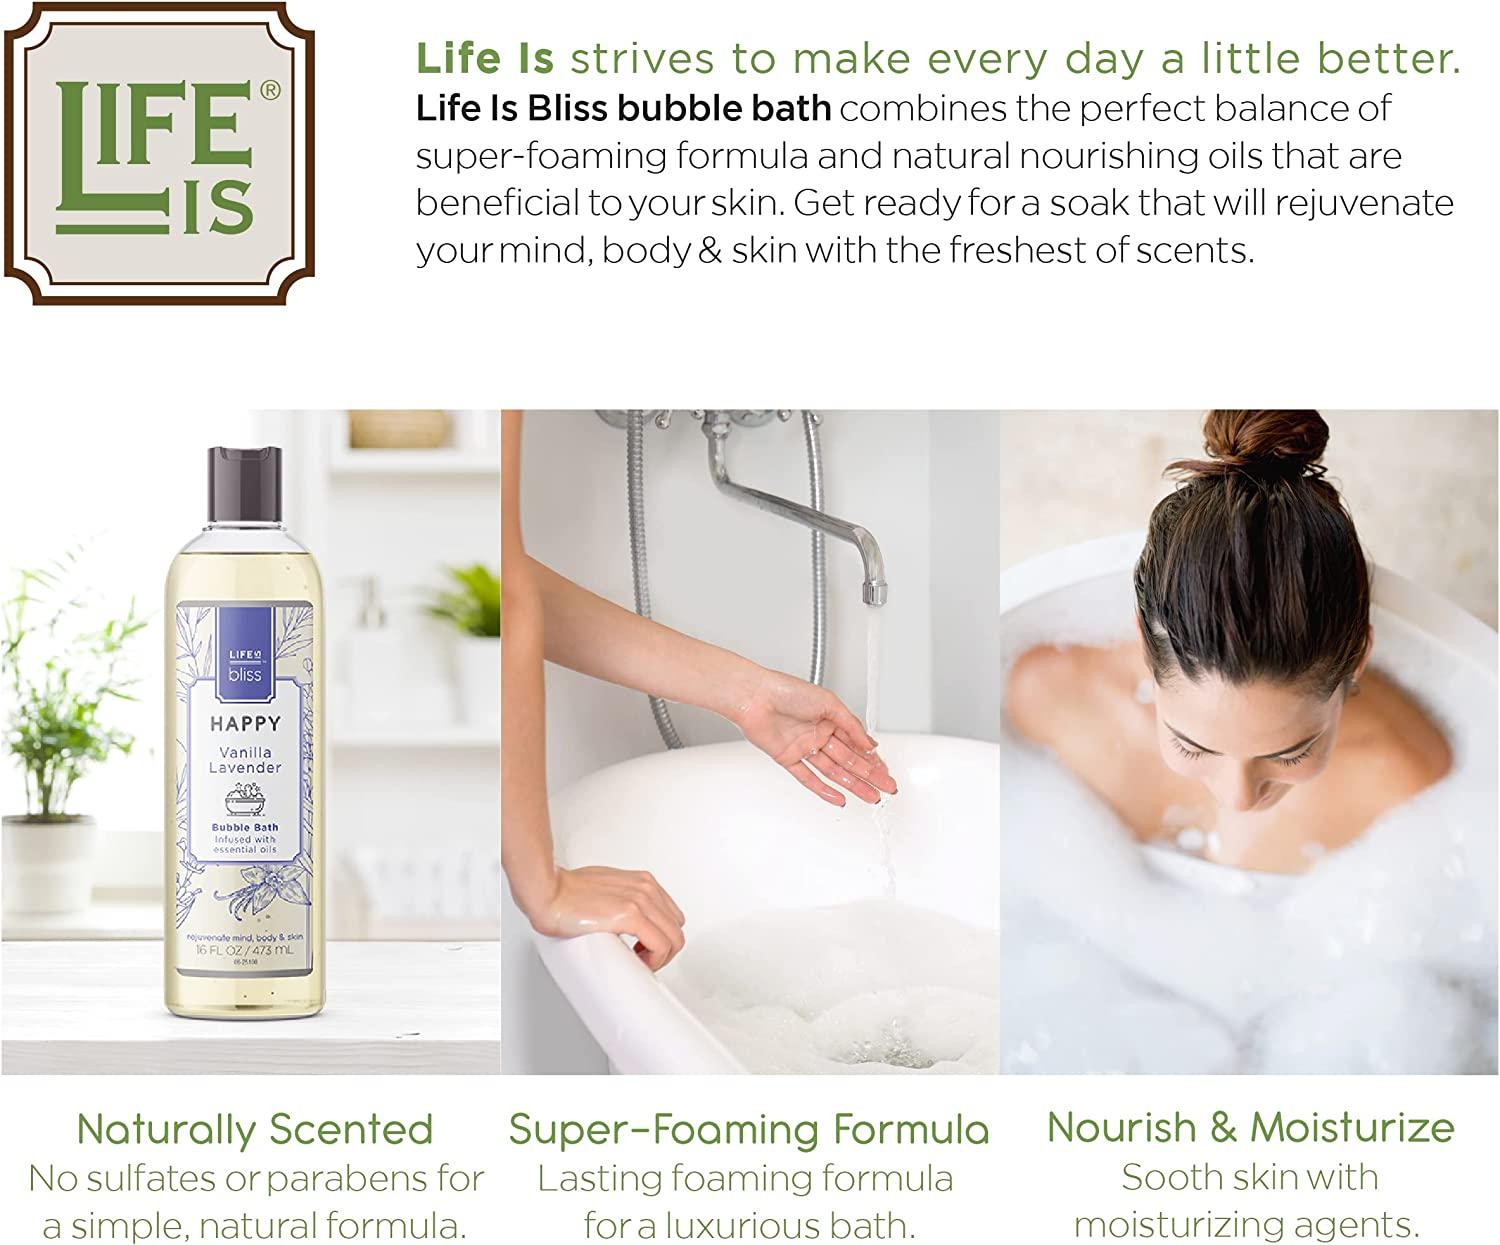 Bubble Bath. Skin-Softening. Essential Oil